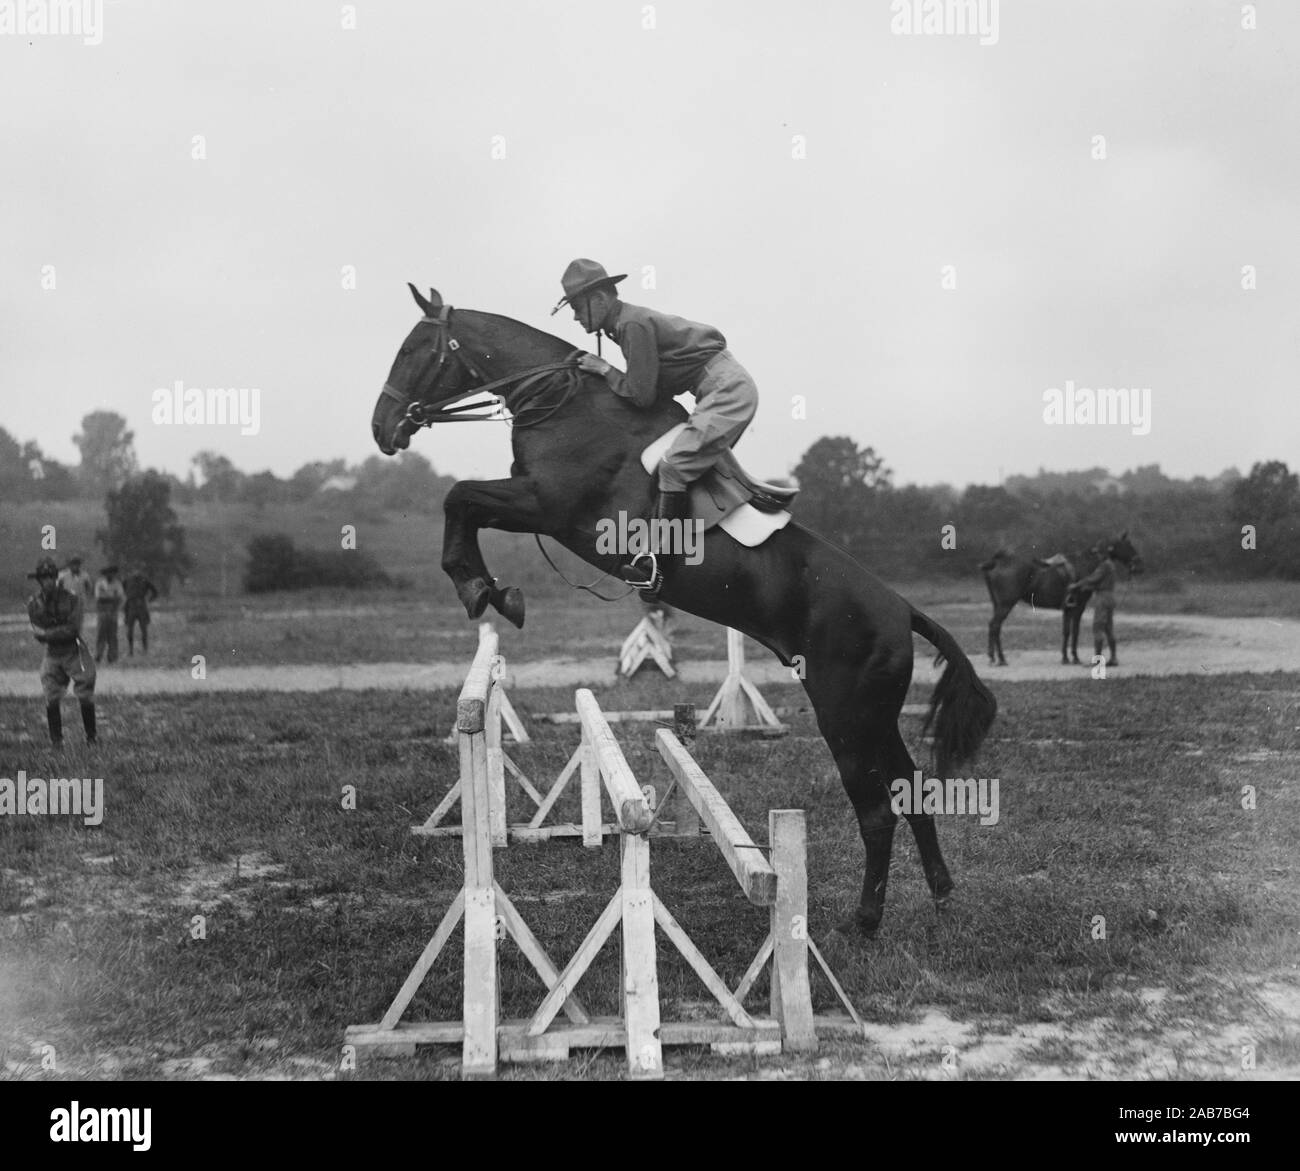 Man Horse jumping ca. 1928 Stock Photo - Alamy